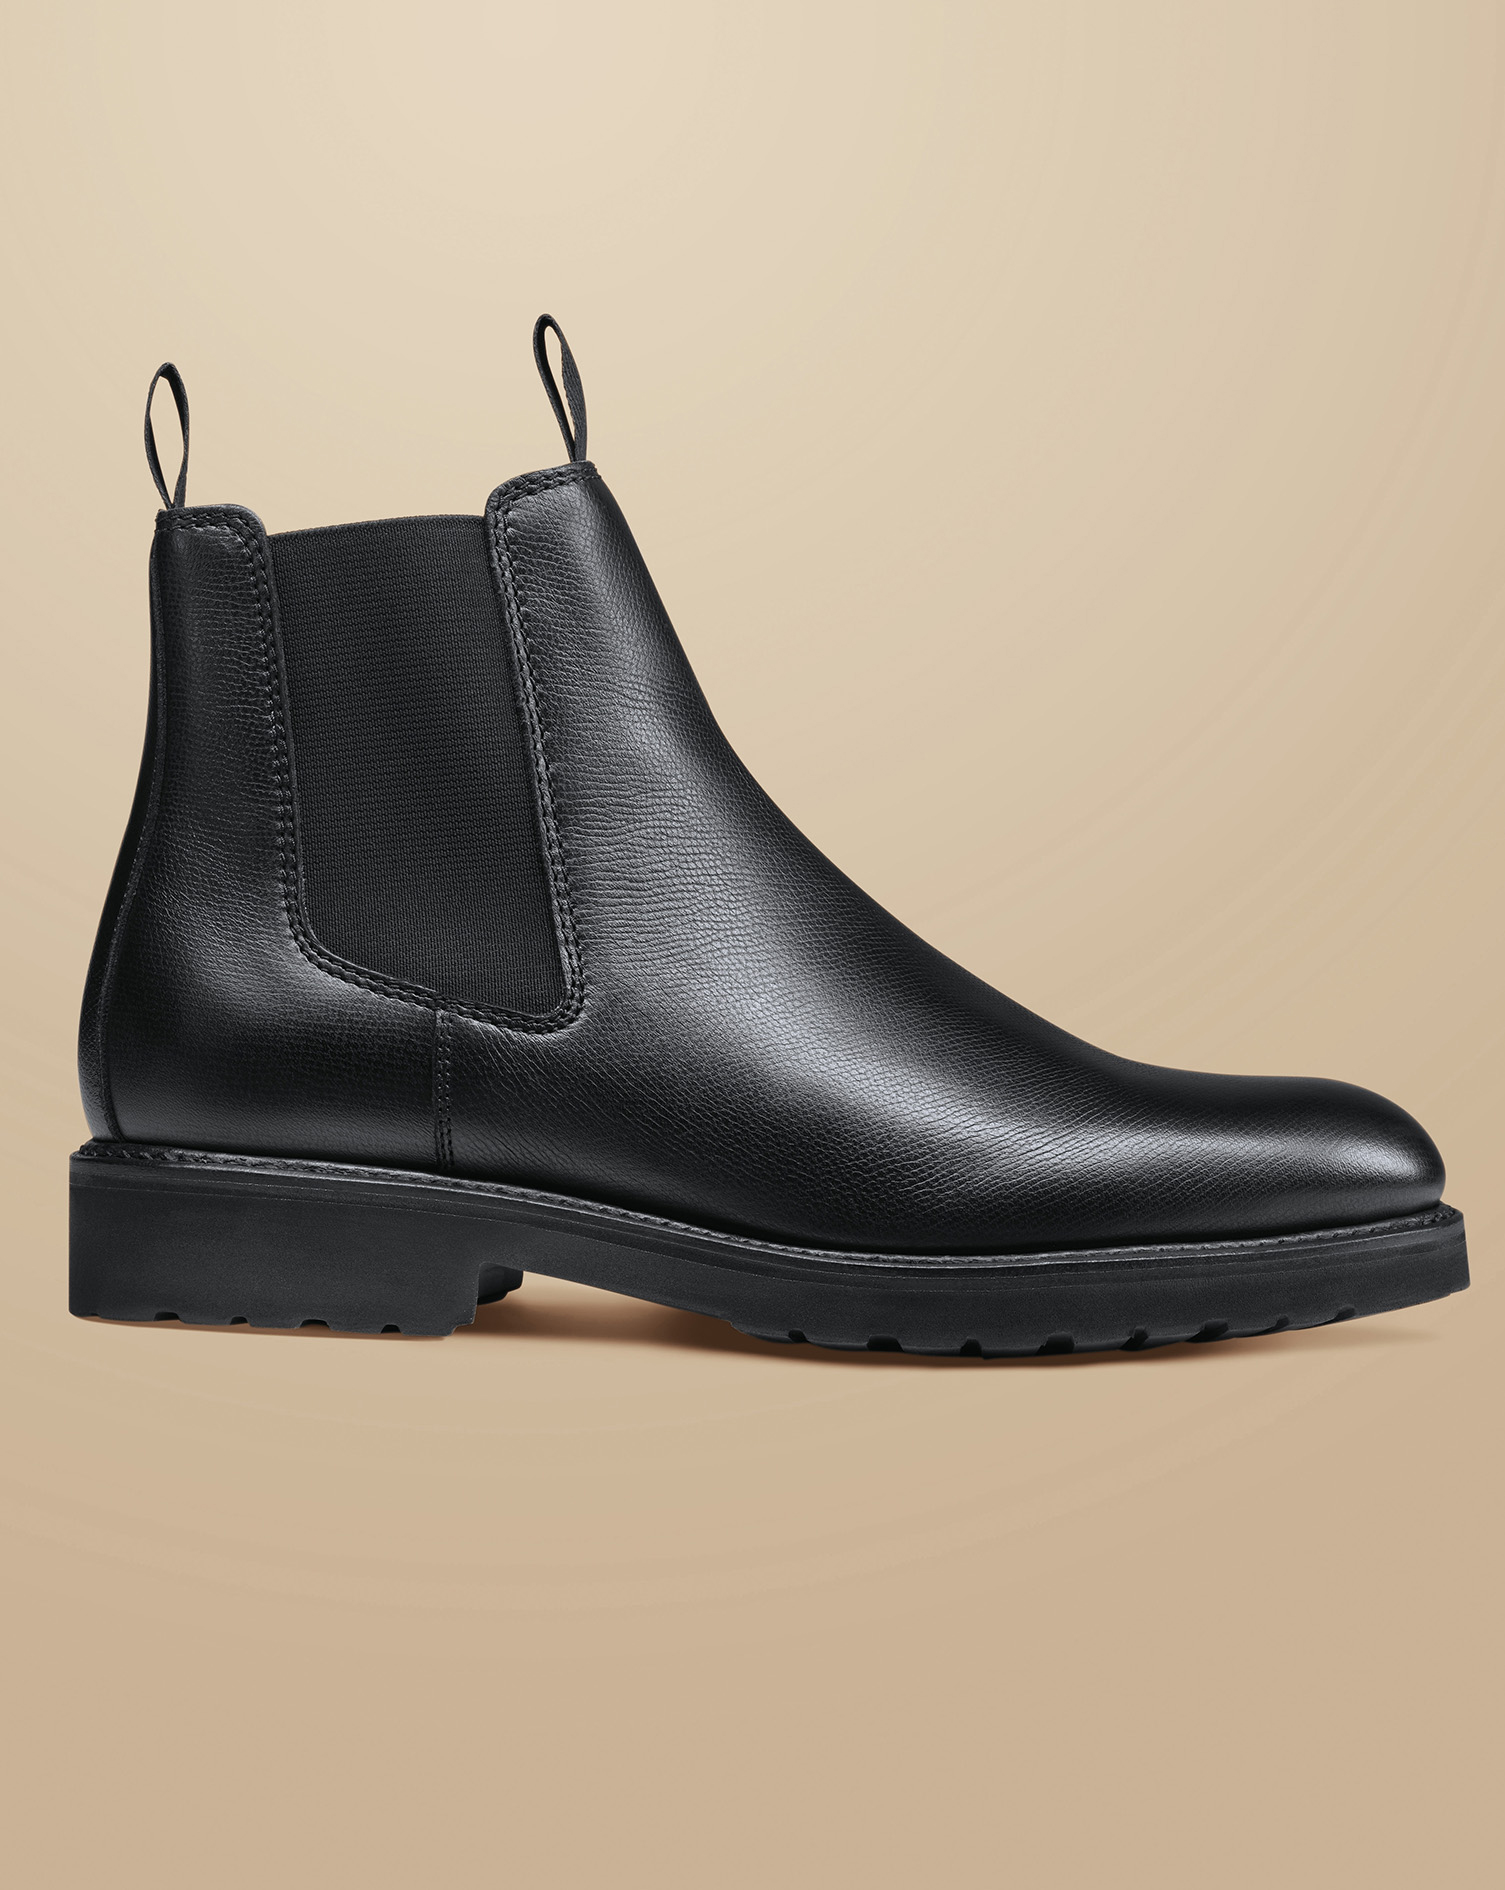 Men's Charles Tyrwhitt Rubber Sole Grain Leather Chelsea Boots - Black Size 11
